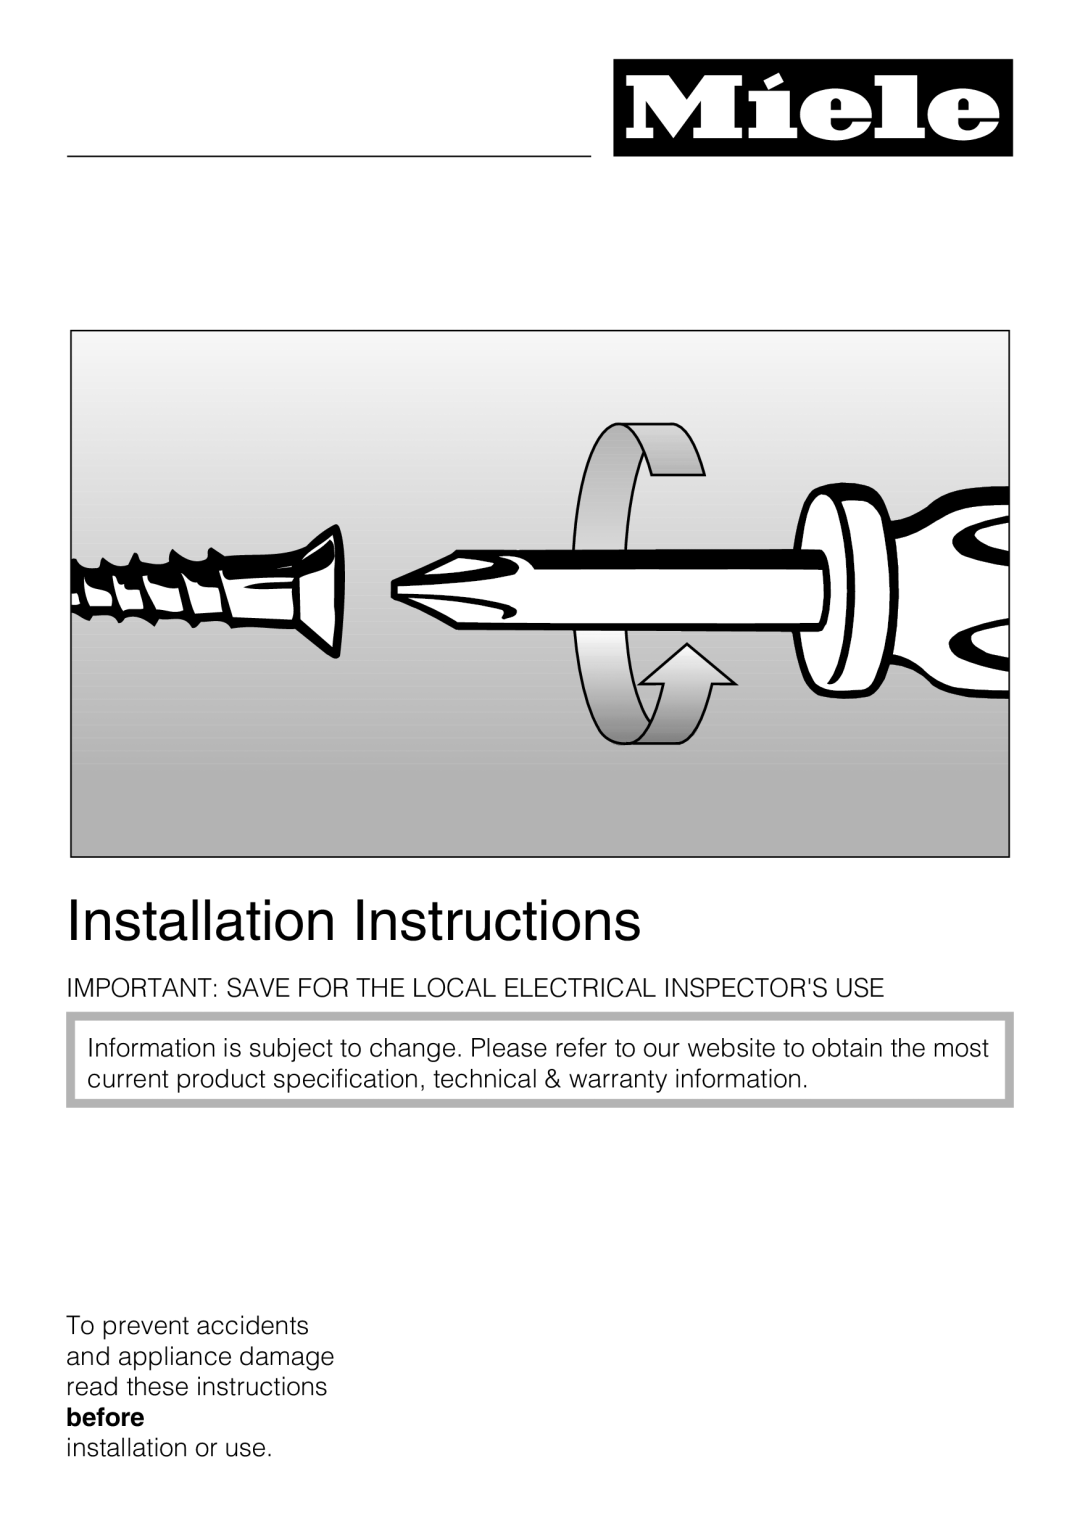 Miele 09 855 050 installation instructions Installation Instructions 